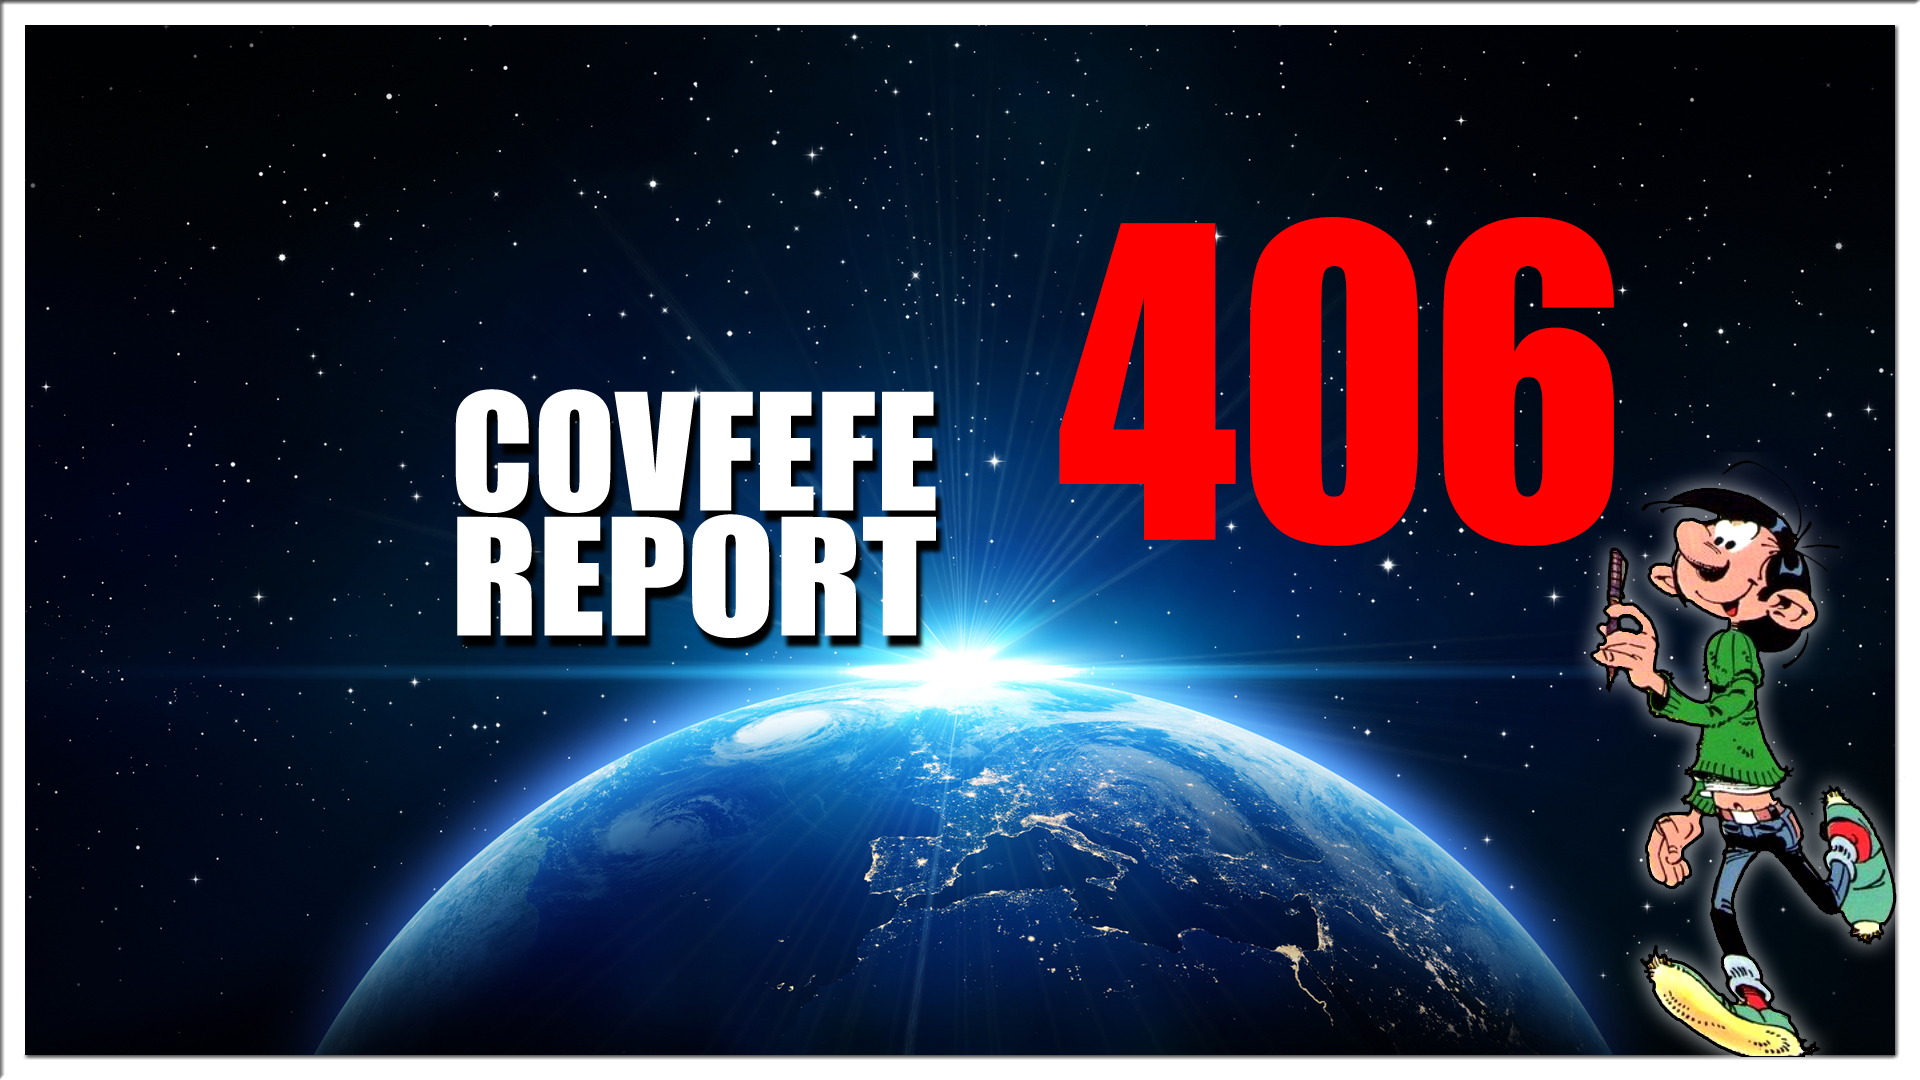 Covfefe Report 406. The Pelosi payoff, Pedo Biden, Deepfake, Tom Cruise, TK verkiezingen2021 Oproep